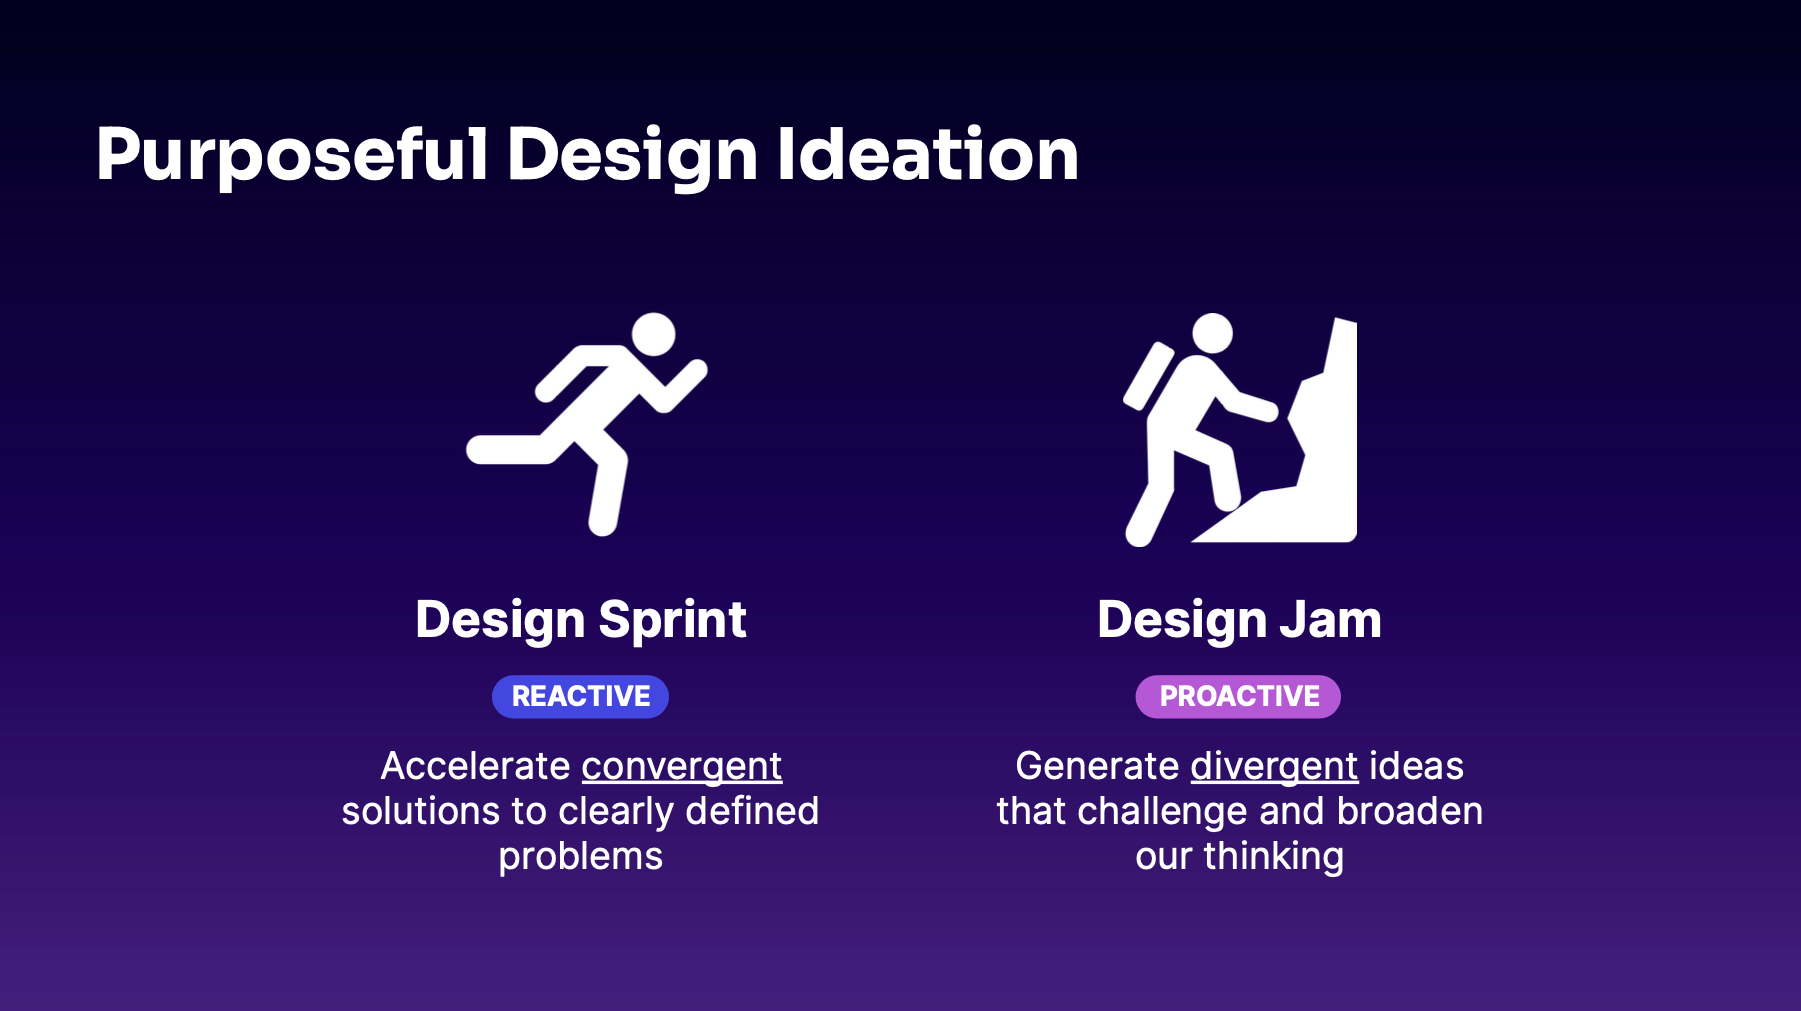 Diagram showing differences between Design Sprint (reactive, convergent) vs. Design Jam (proactive, divergent)